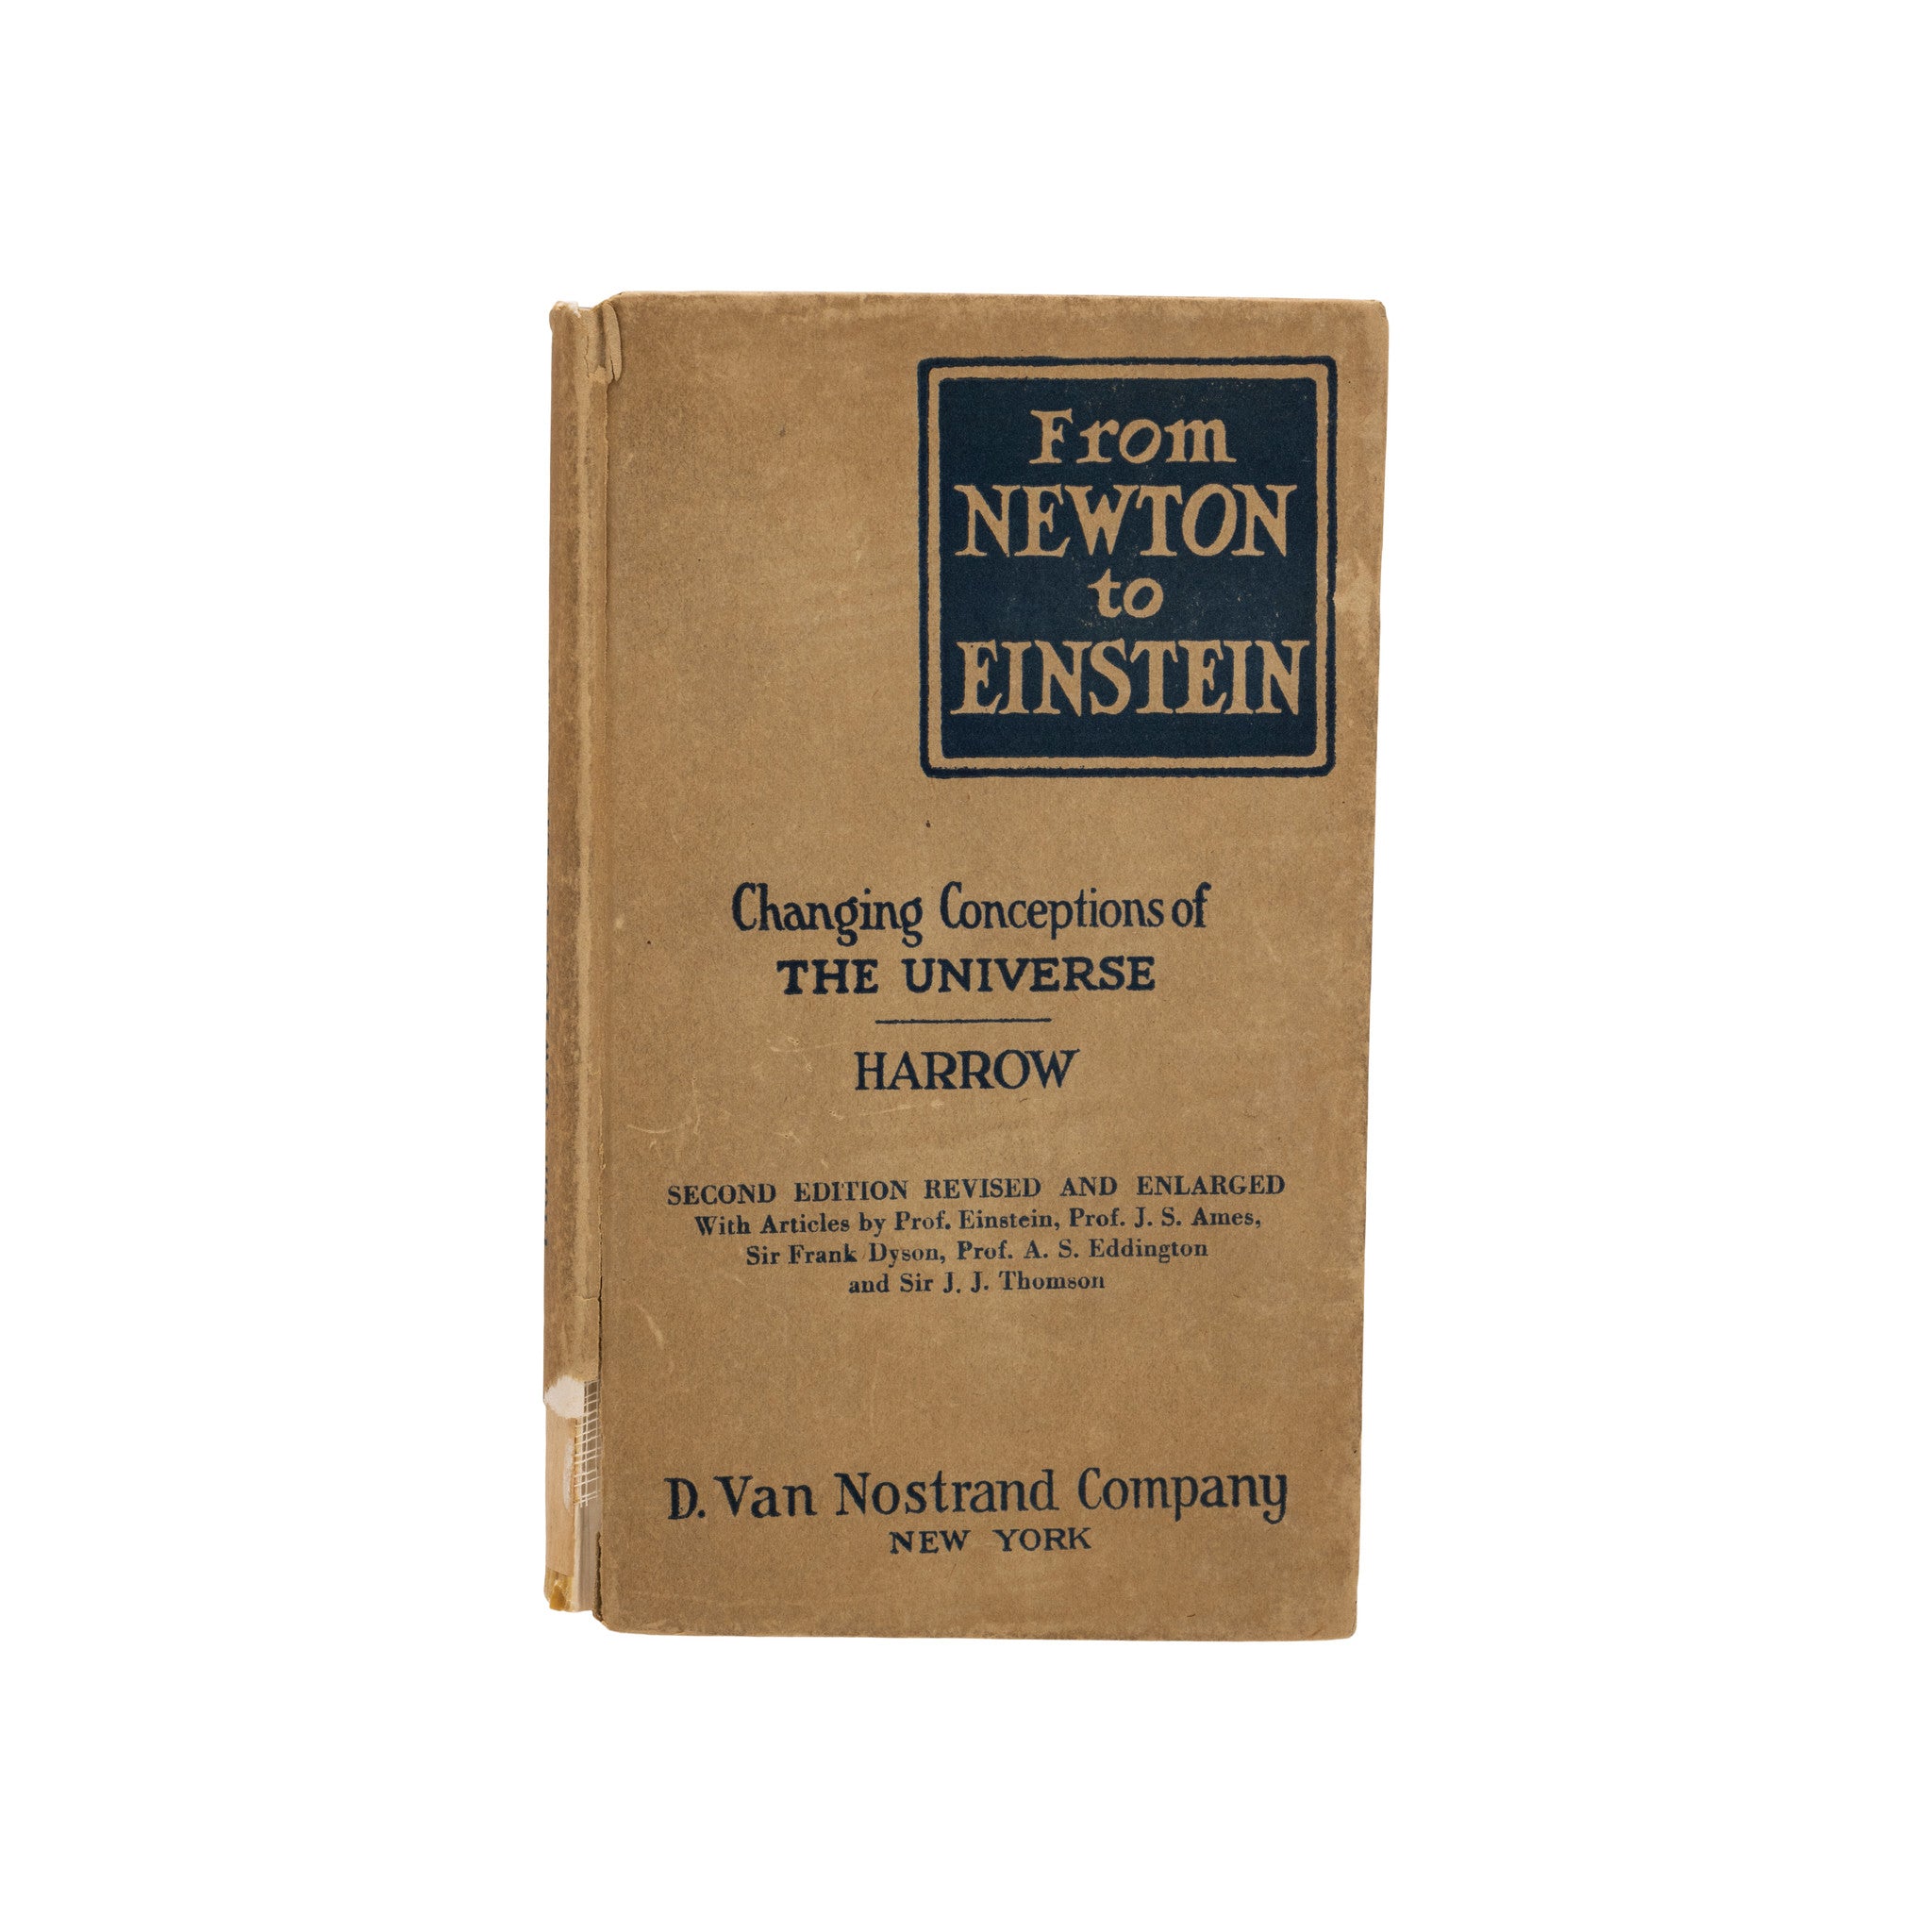 "From Newton to Einstein: Changing Conceptions of the Universe" by Albert Einstein